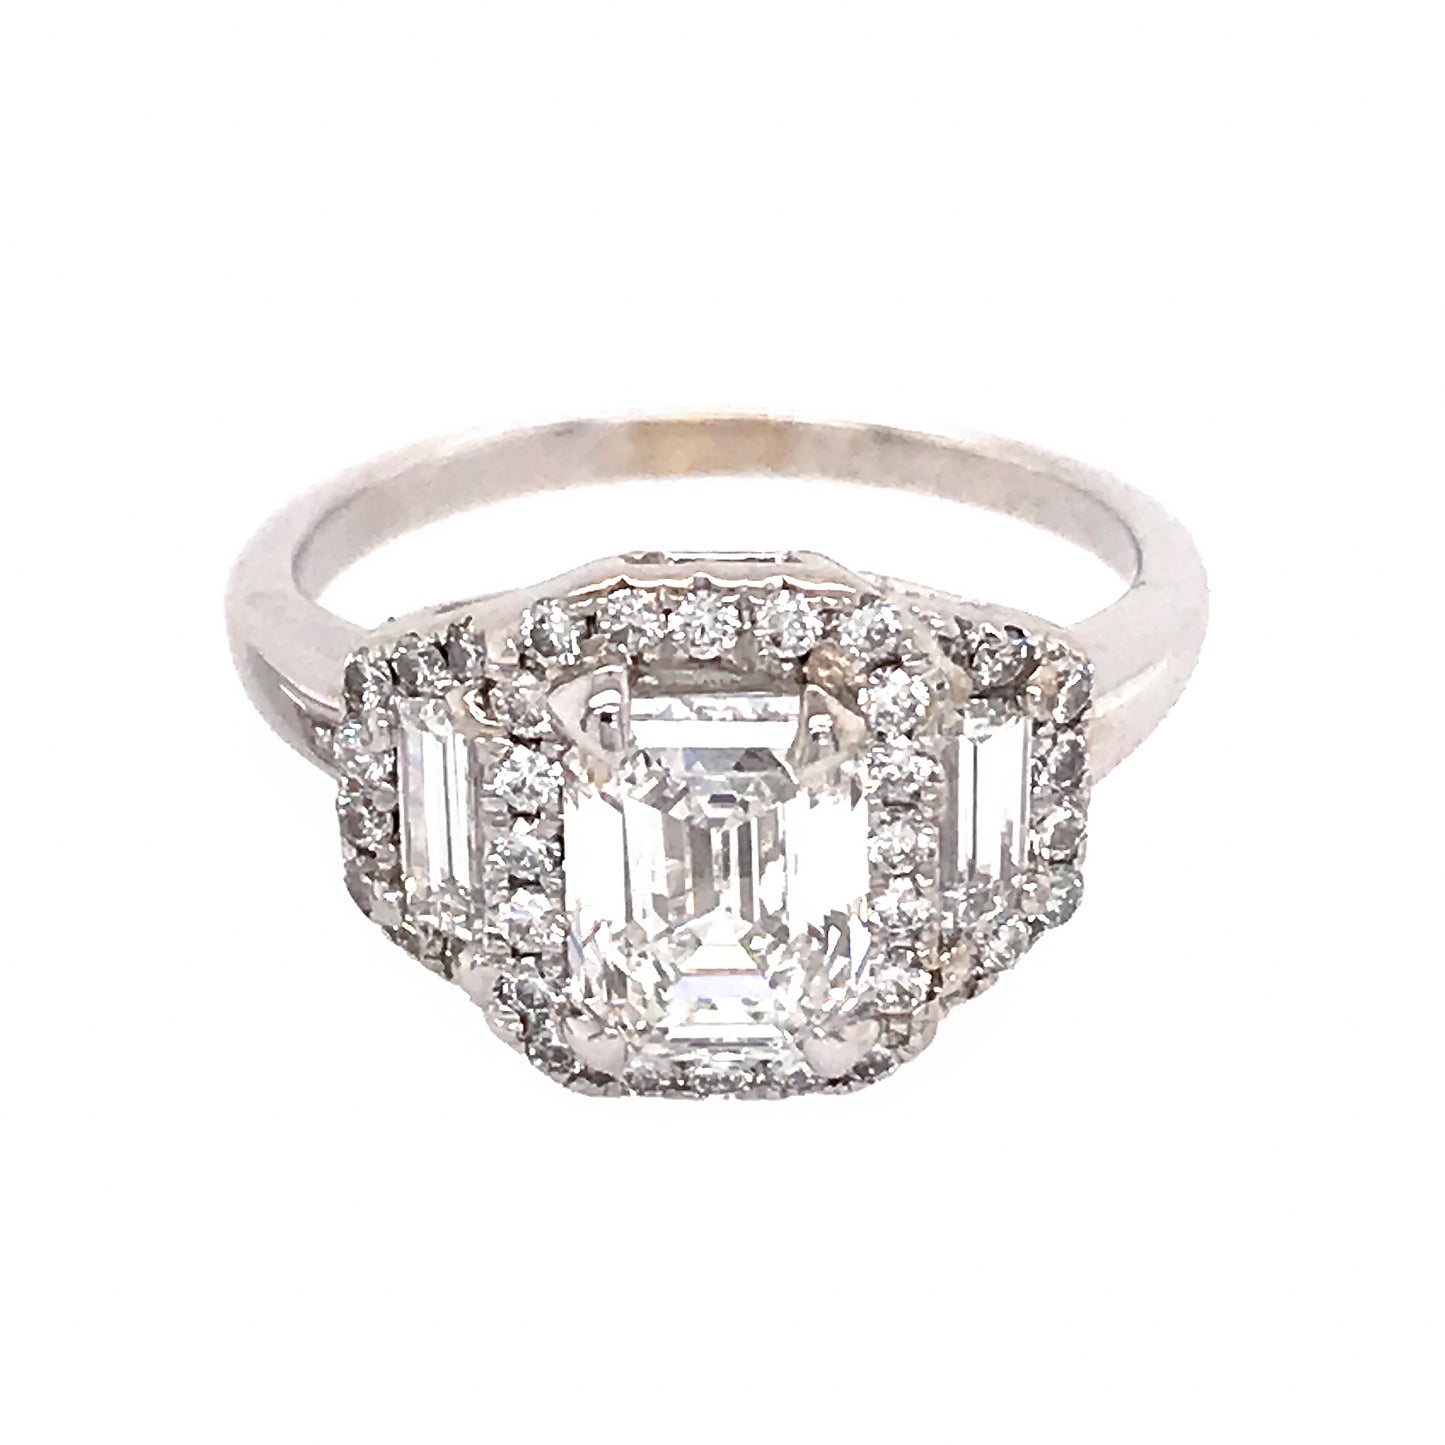 GIA Certified 1.33 Carat Emerald Cut Diamond Engagement Ring with Matching Diamond Band